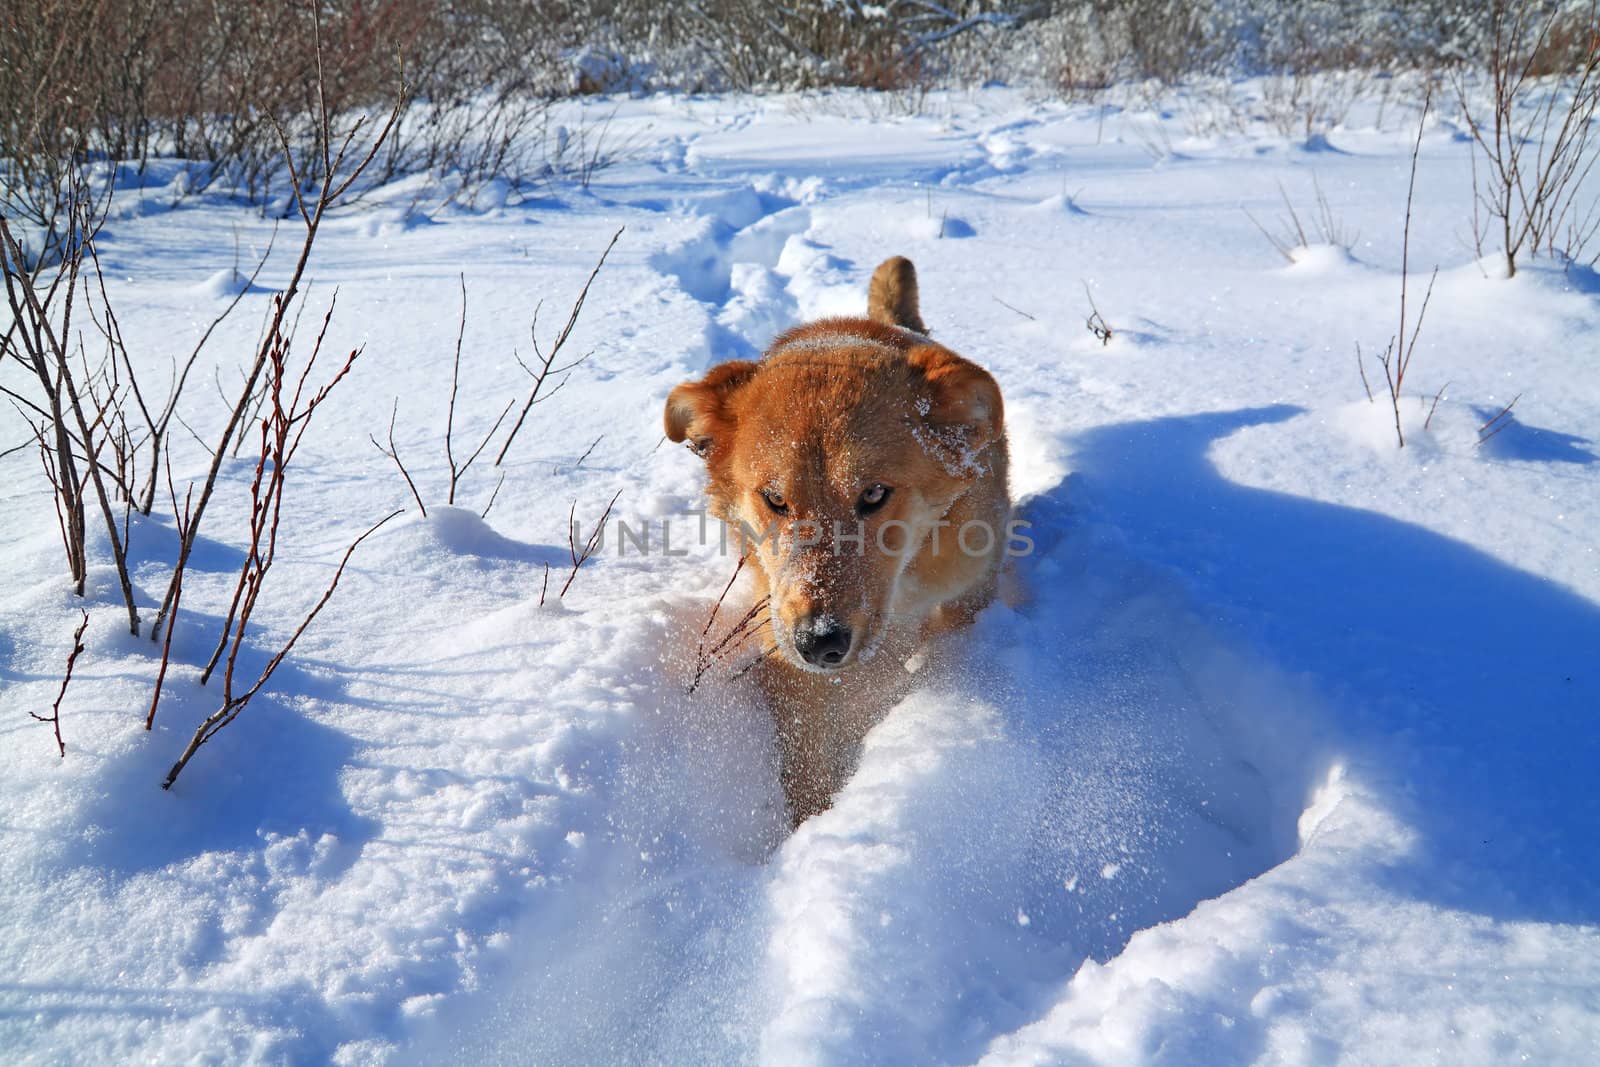 redhead dog in deep snow by basel101658